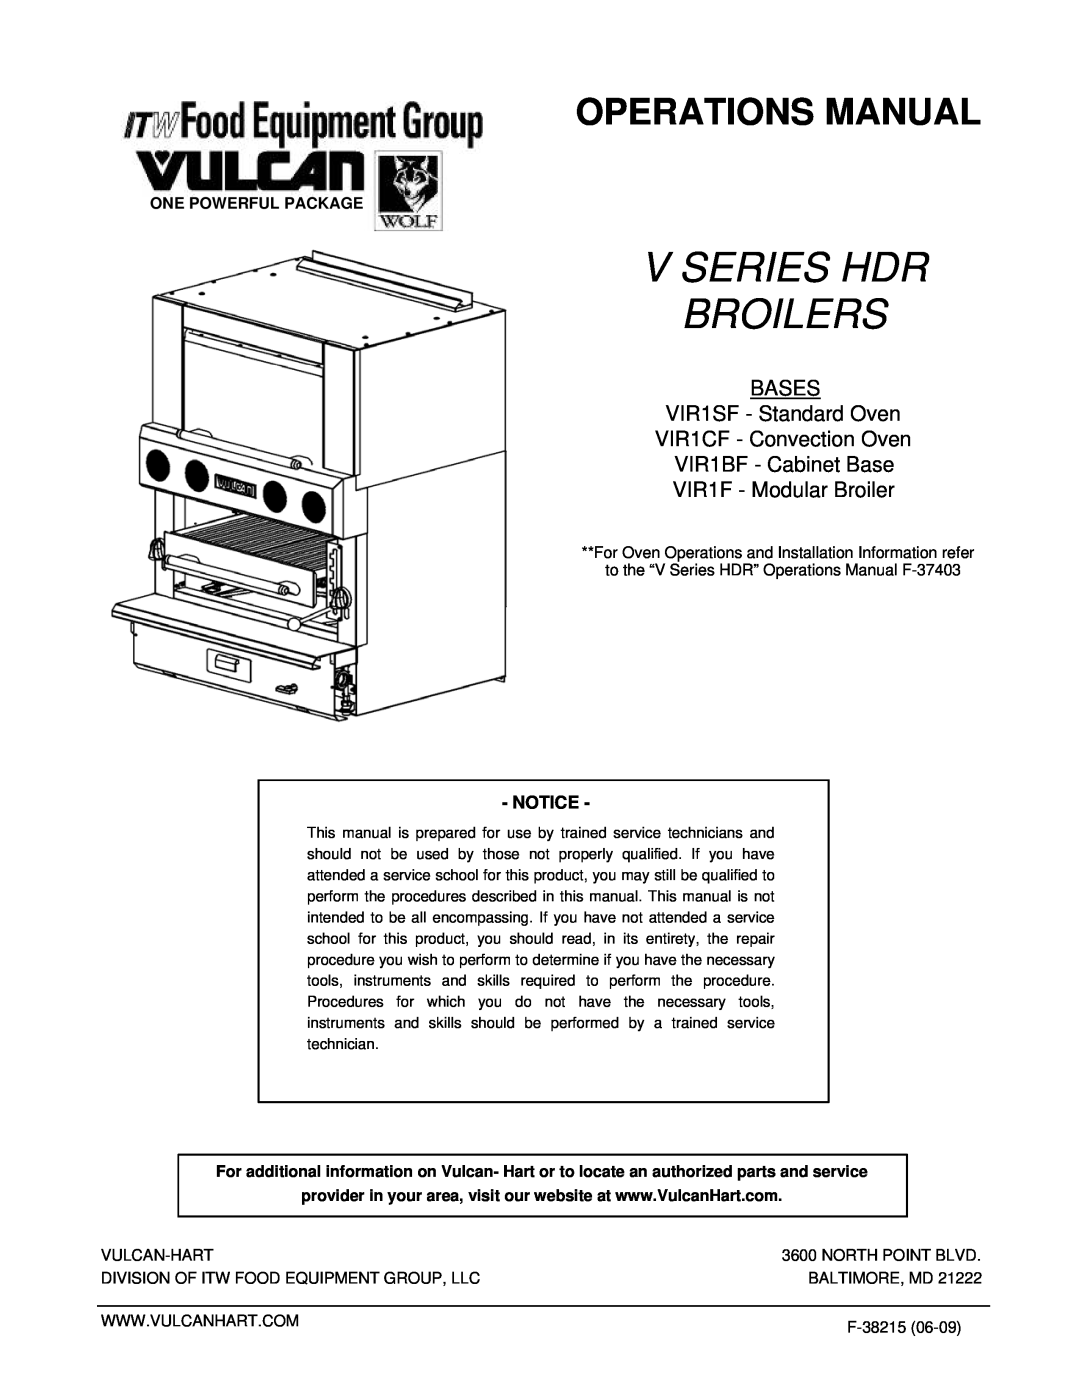 Vulcan-Hart manual BASES VIR1SF - Standard Oven, VIR1CF - Convection Oven VIR1BF - Cabinet Base, V Series Hdr Broilers 